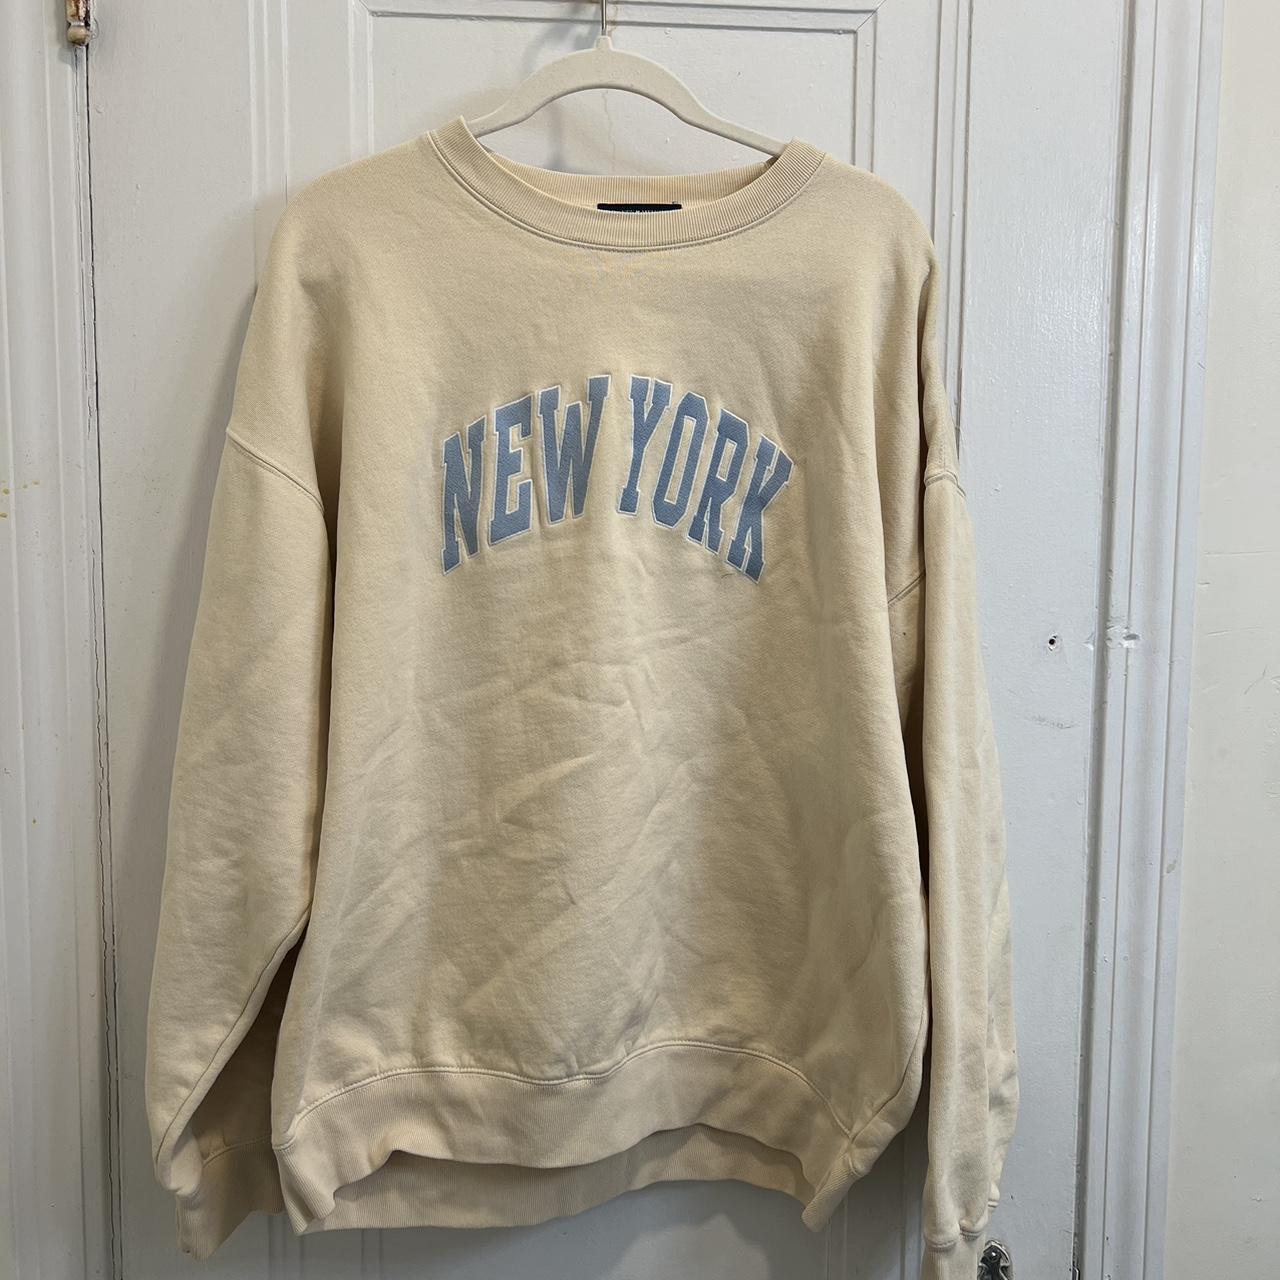 Brandy Melville New York Sweatshirt 8612 